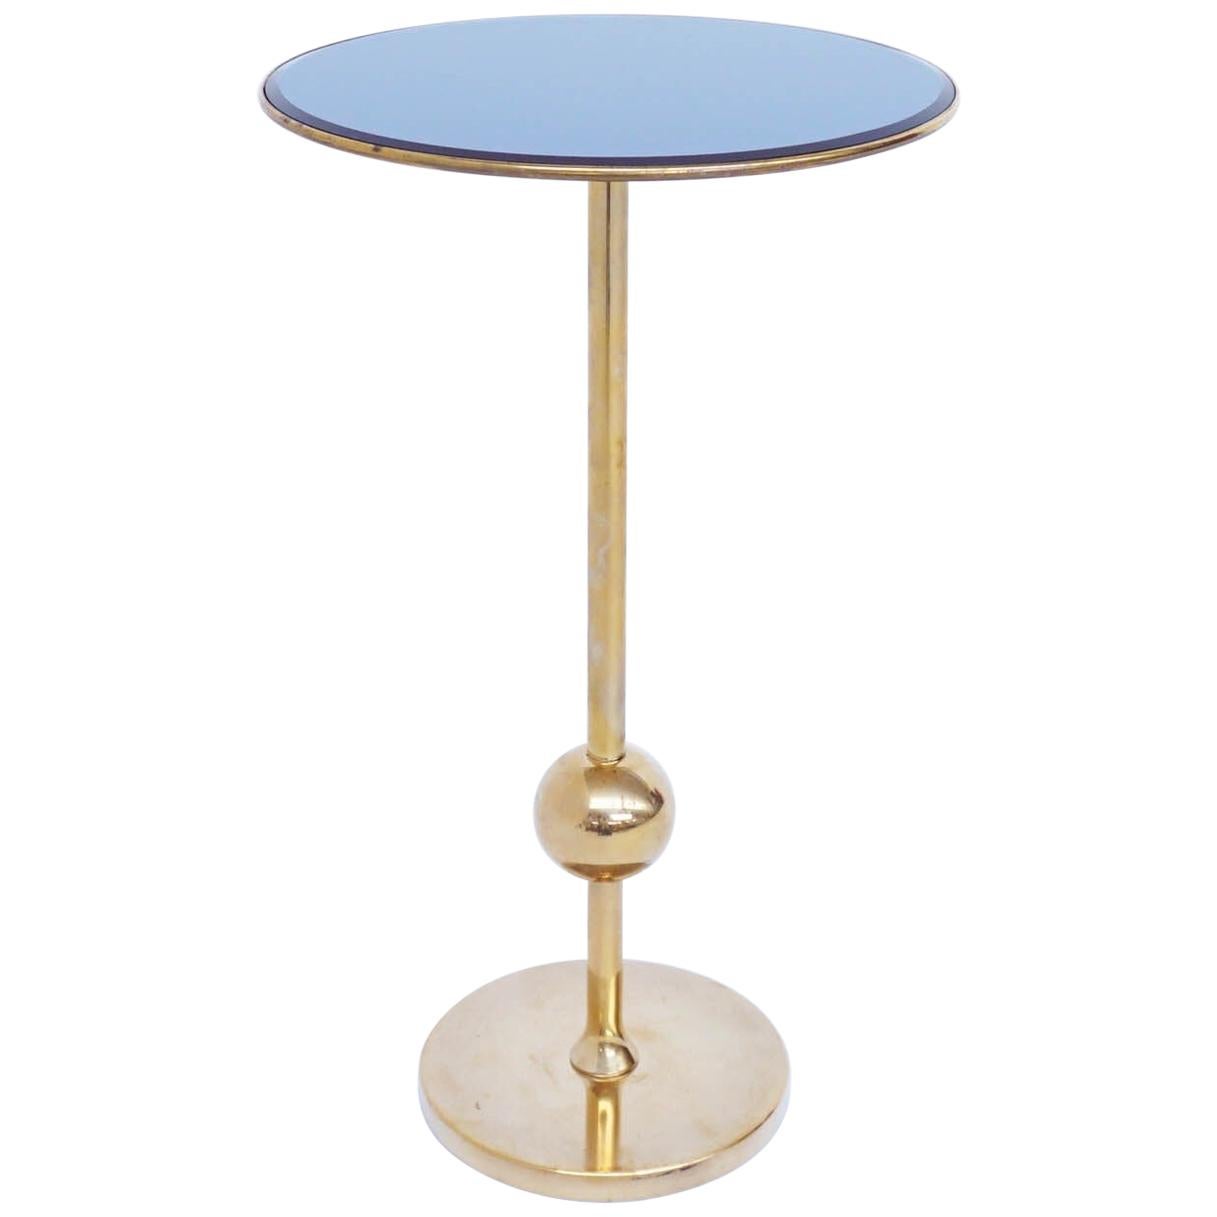 Osvaldo Borsani T1 Side Table in Brass and Blu Mirrored Glass, Italy, 1950